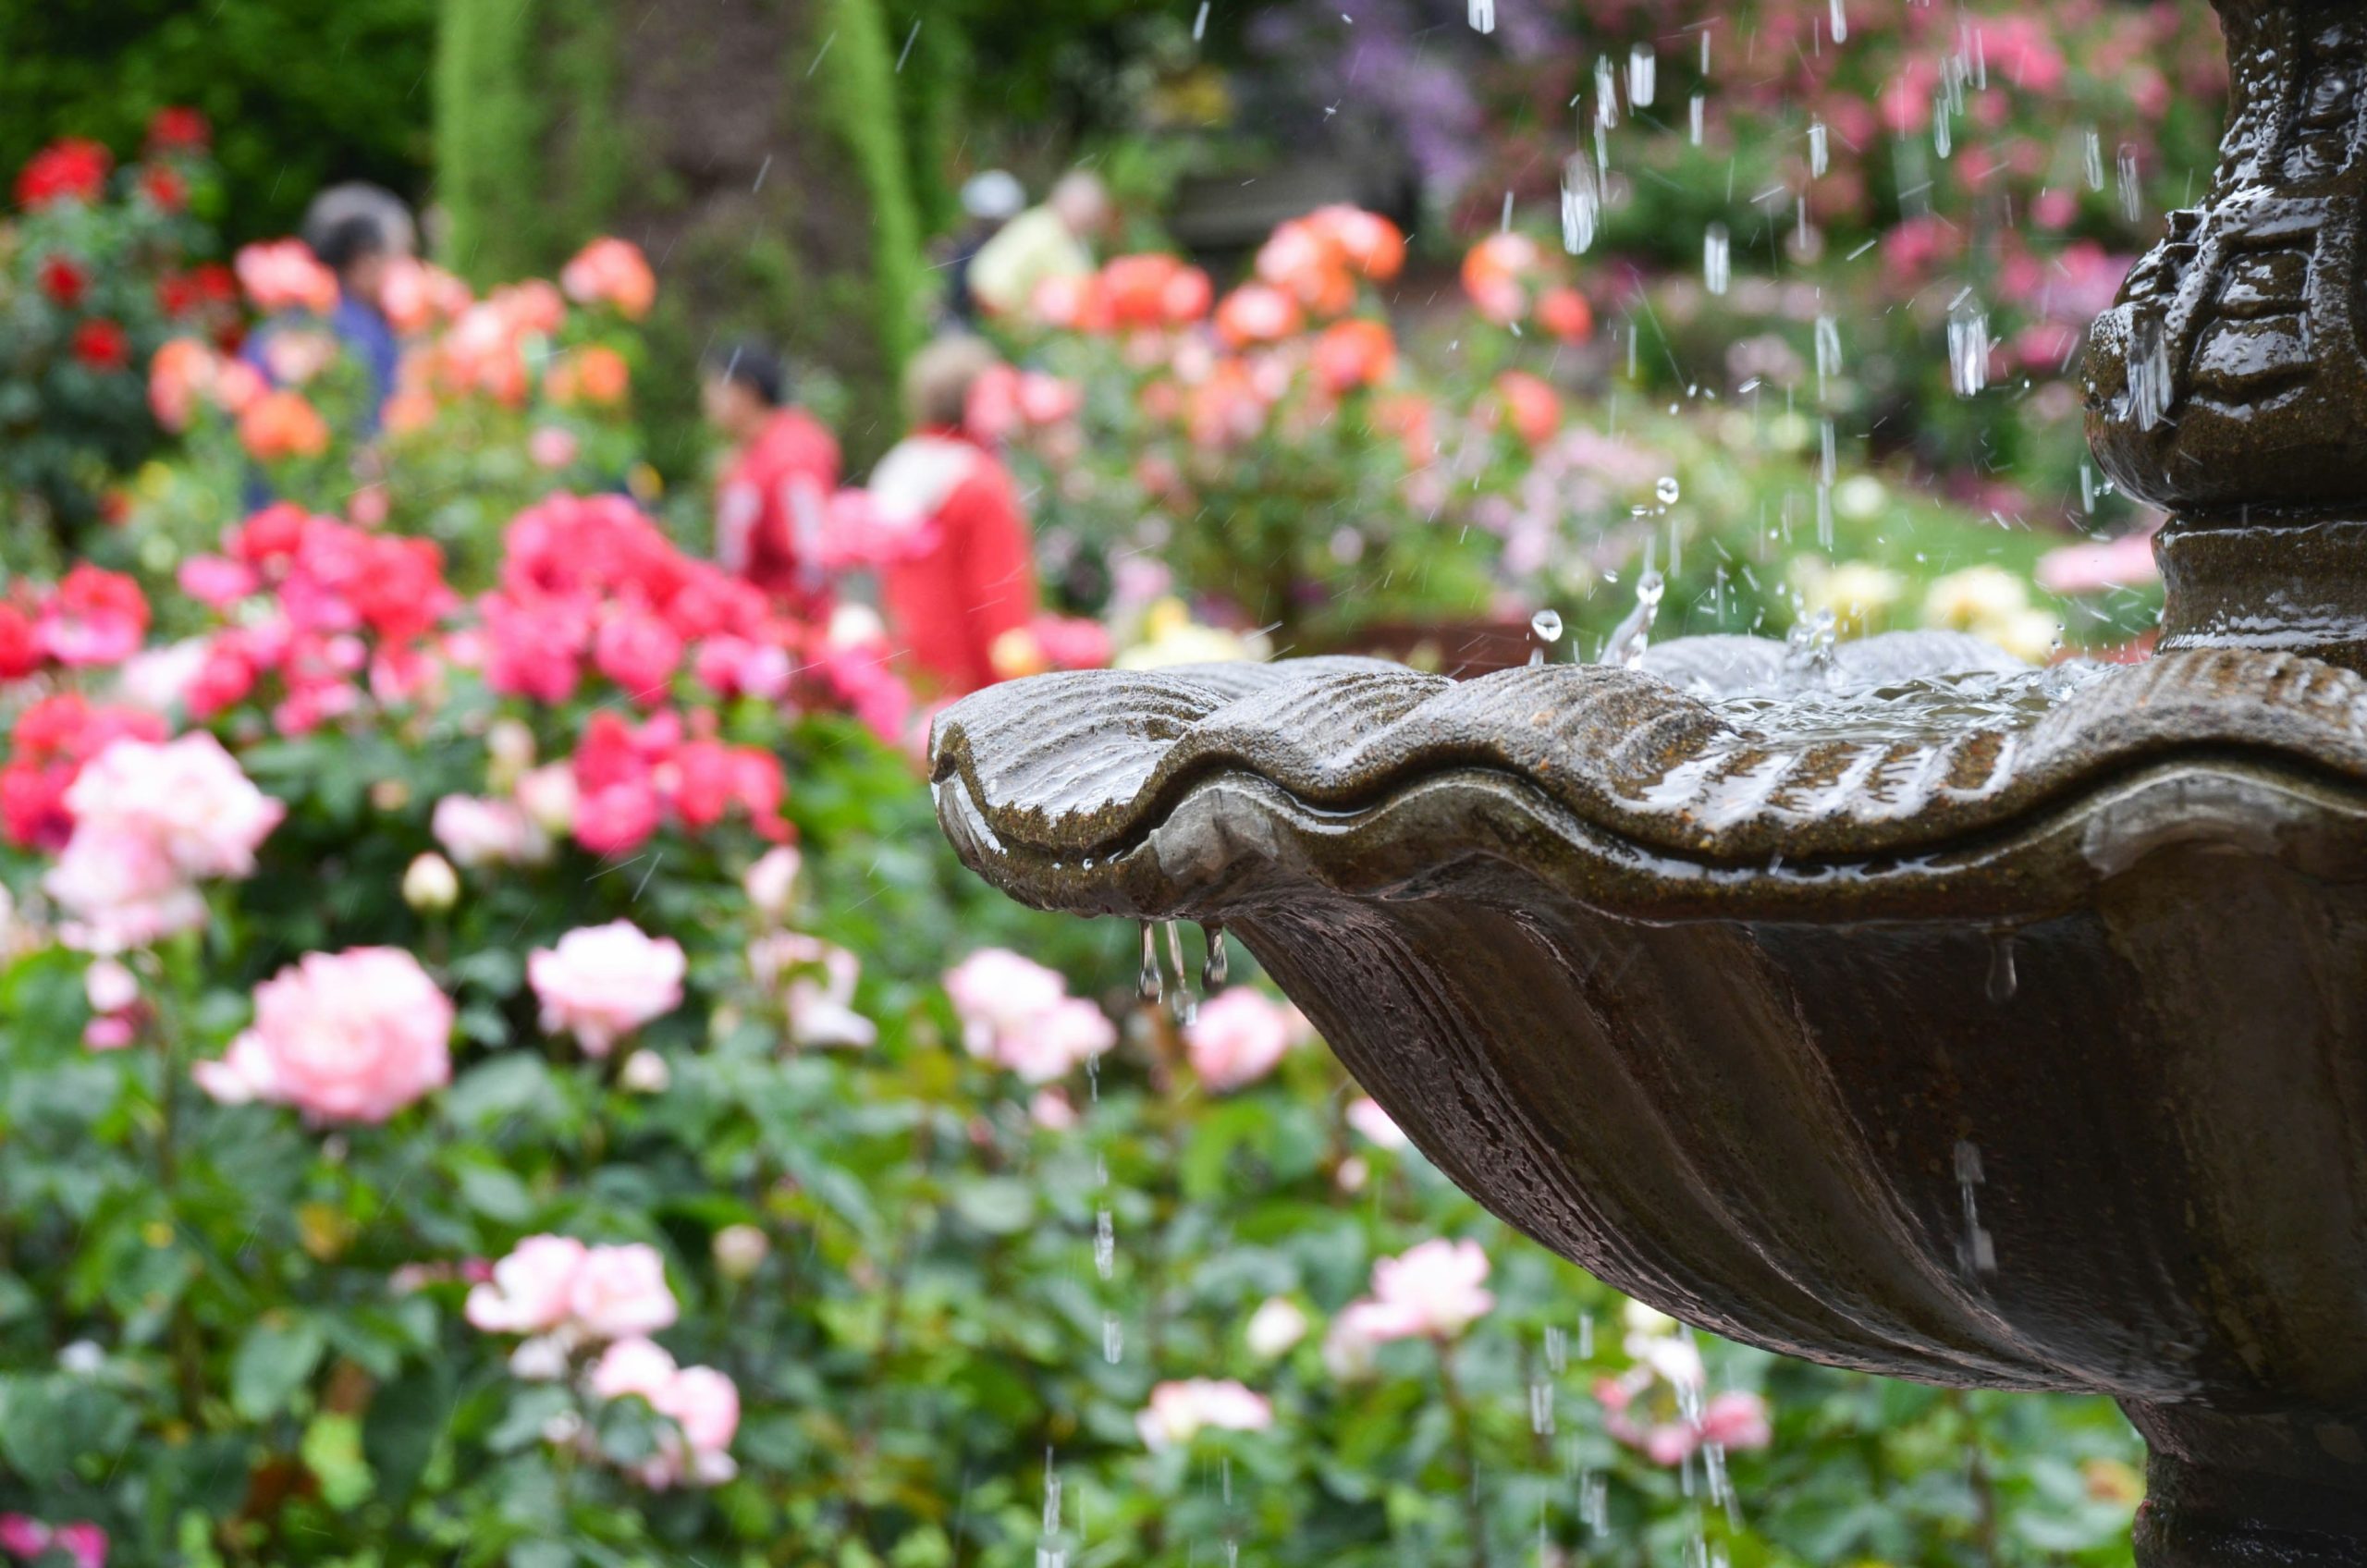 A water fountain in a garden